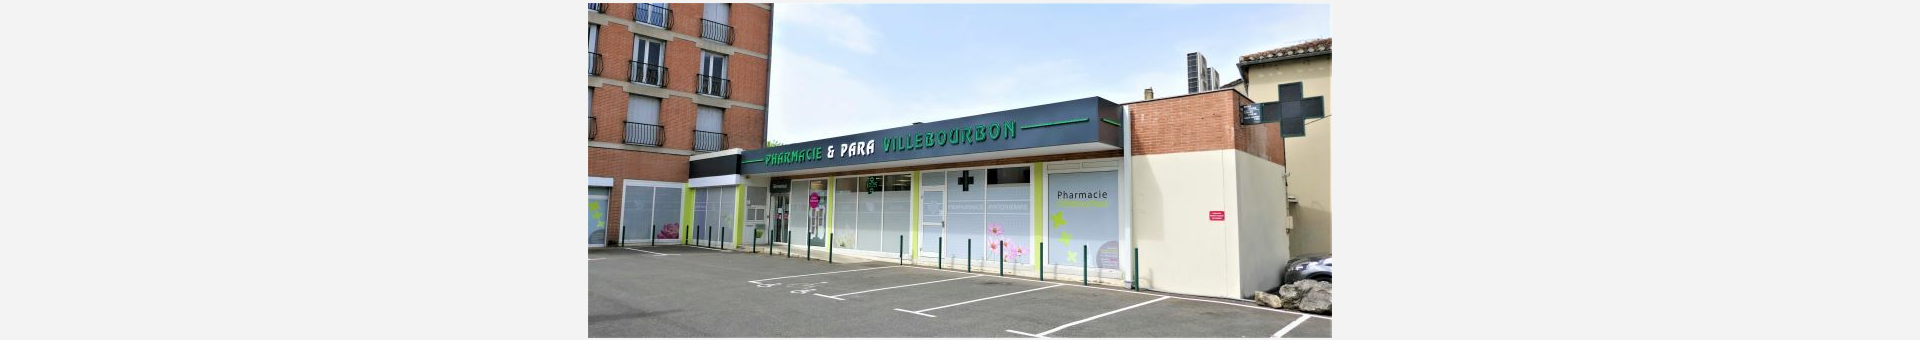 Pharmacie de Villebourbon,Montauban